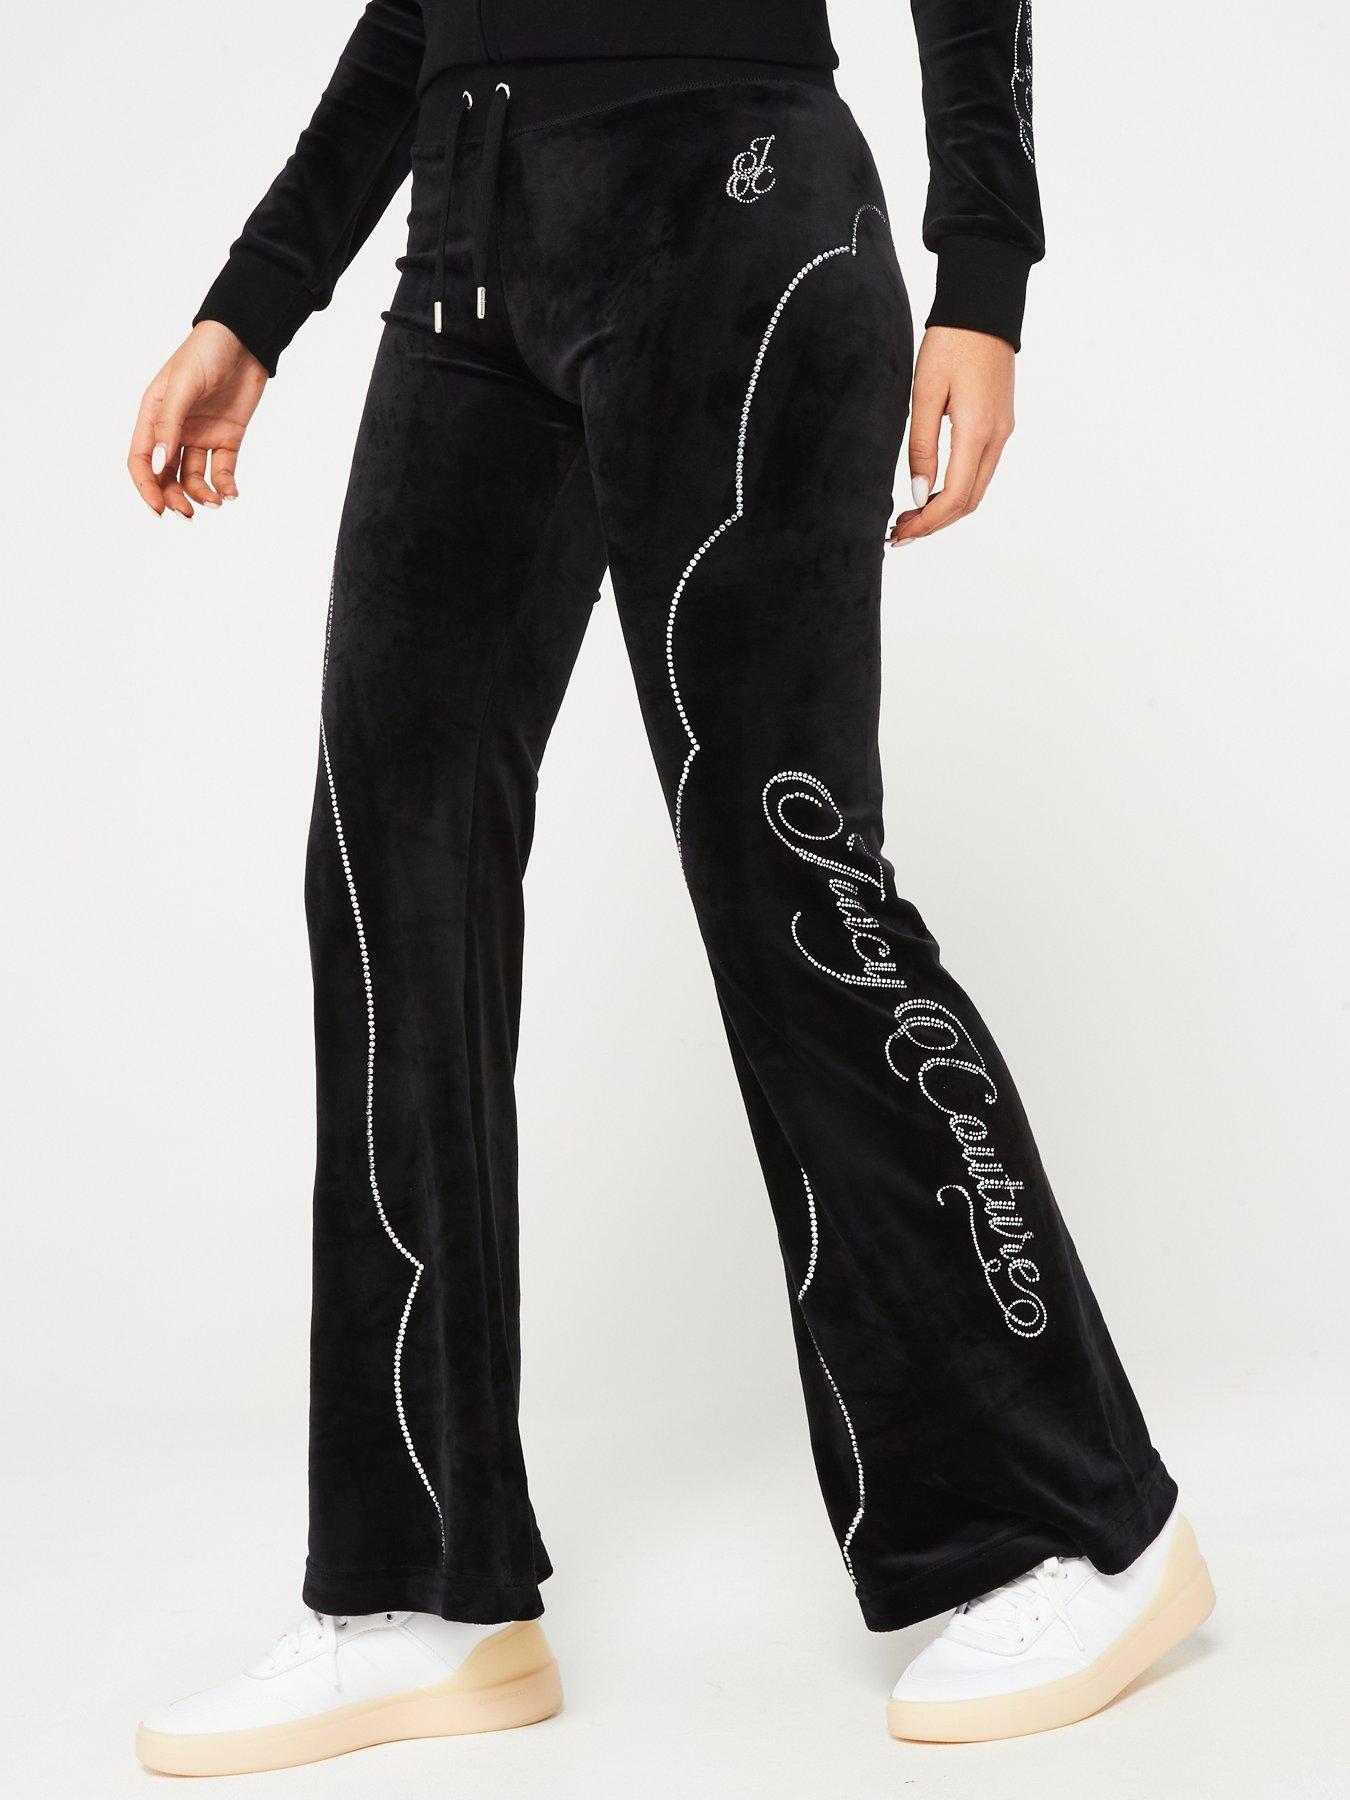 Buy Juicy Couture Tina Track Pant - Black